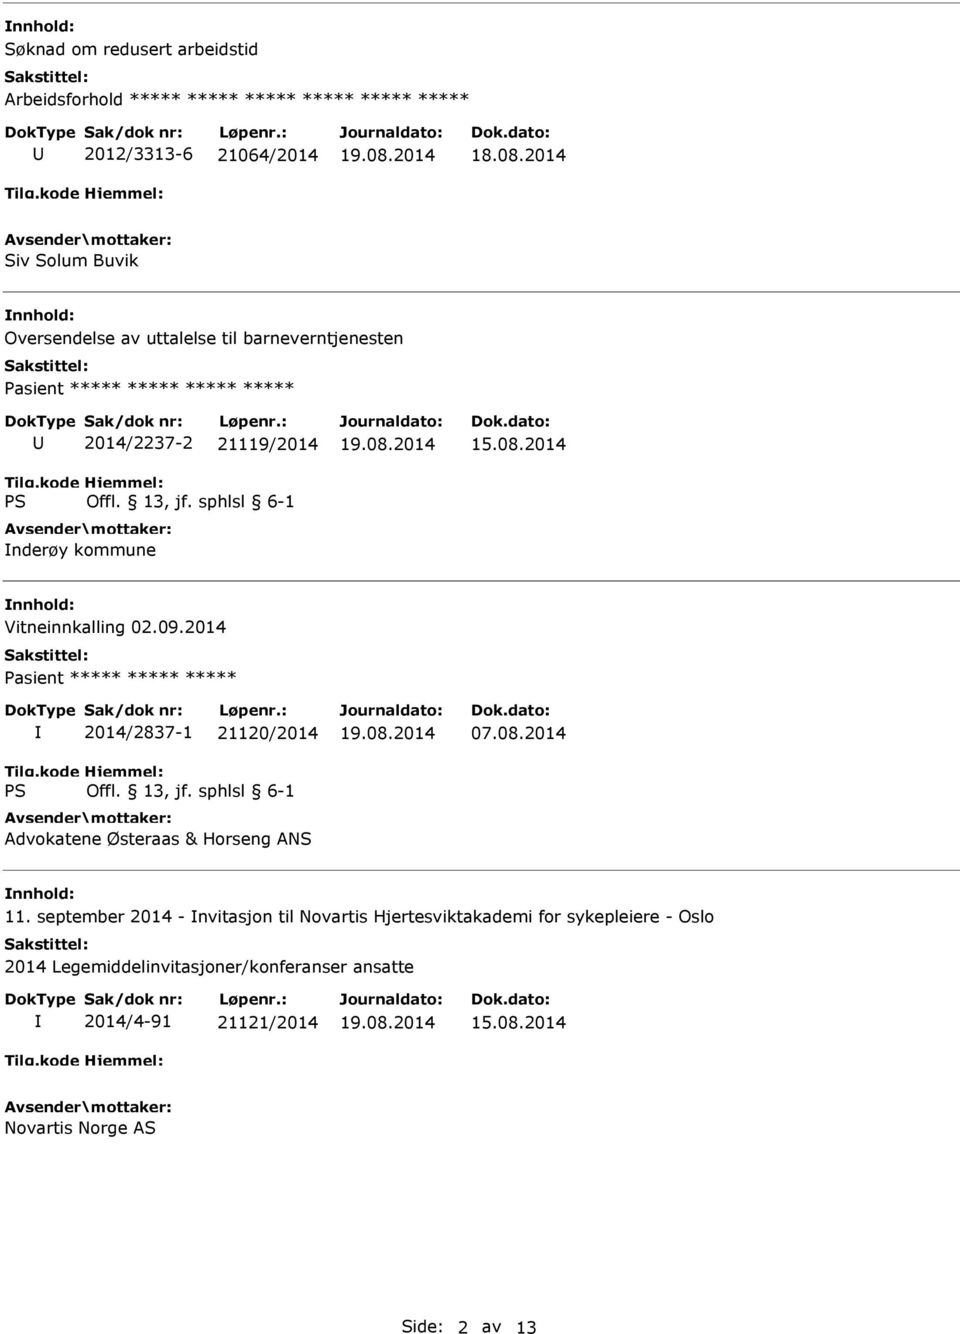 2014 2014/2837-1 21120/2014 Advokatene Østeraas & Horseng ANS 07.08.2014 11.